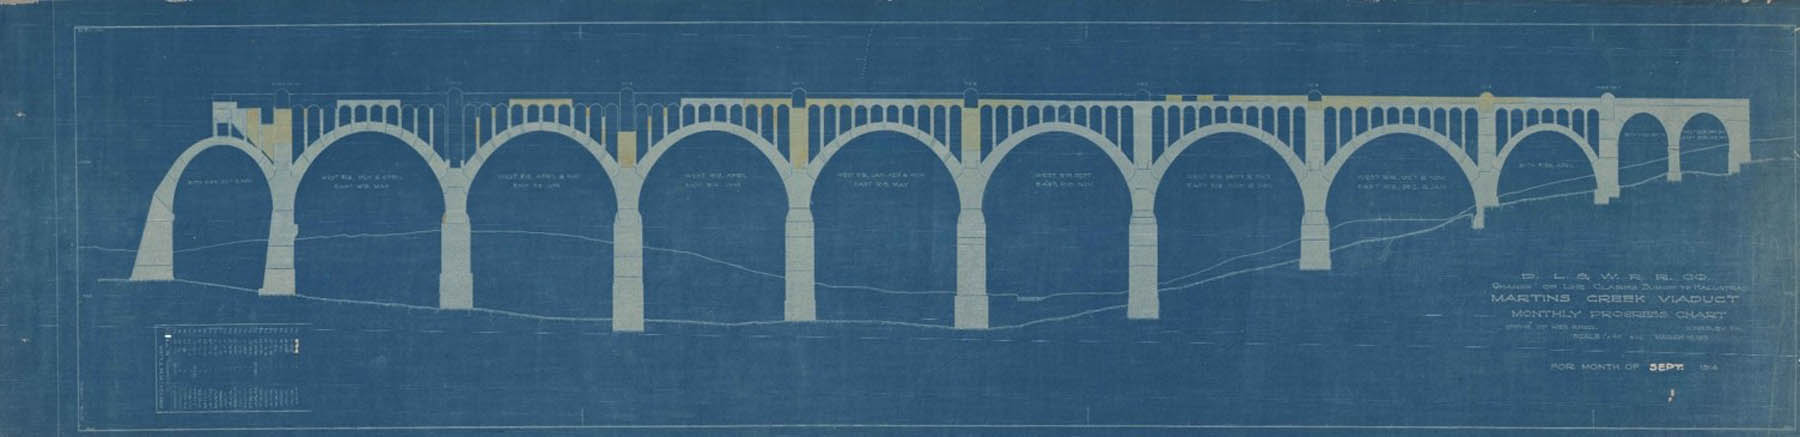 Martin's Creek Viaduct design plans